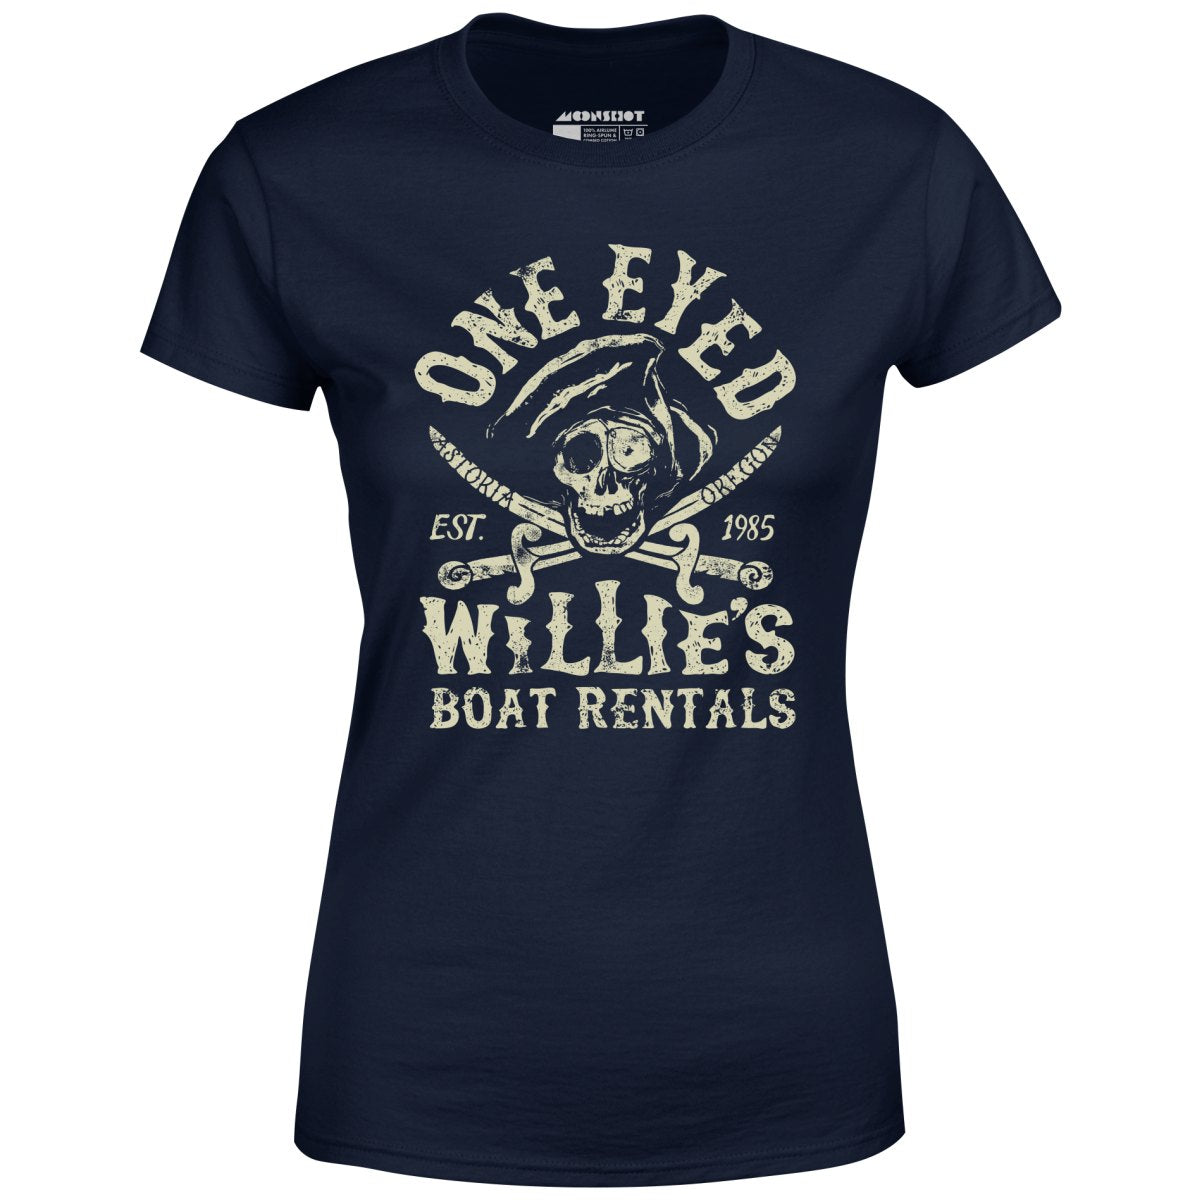 One Eyed Willie's Boat Rentals - Women's T-Shirt